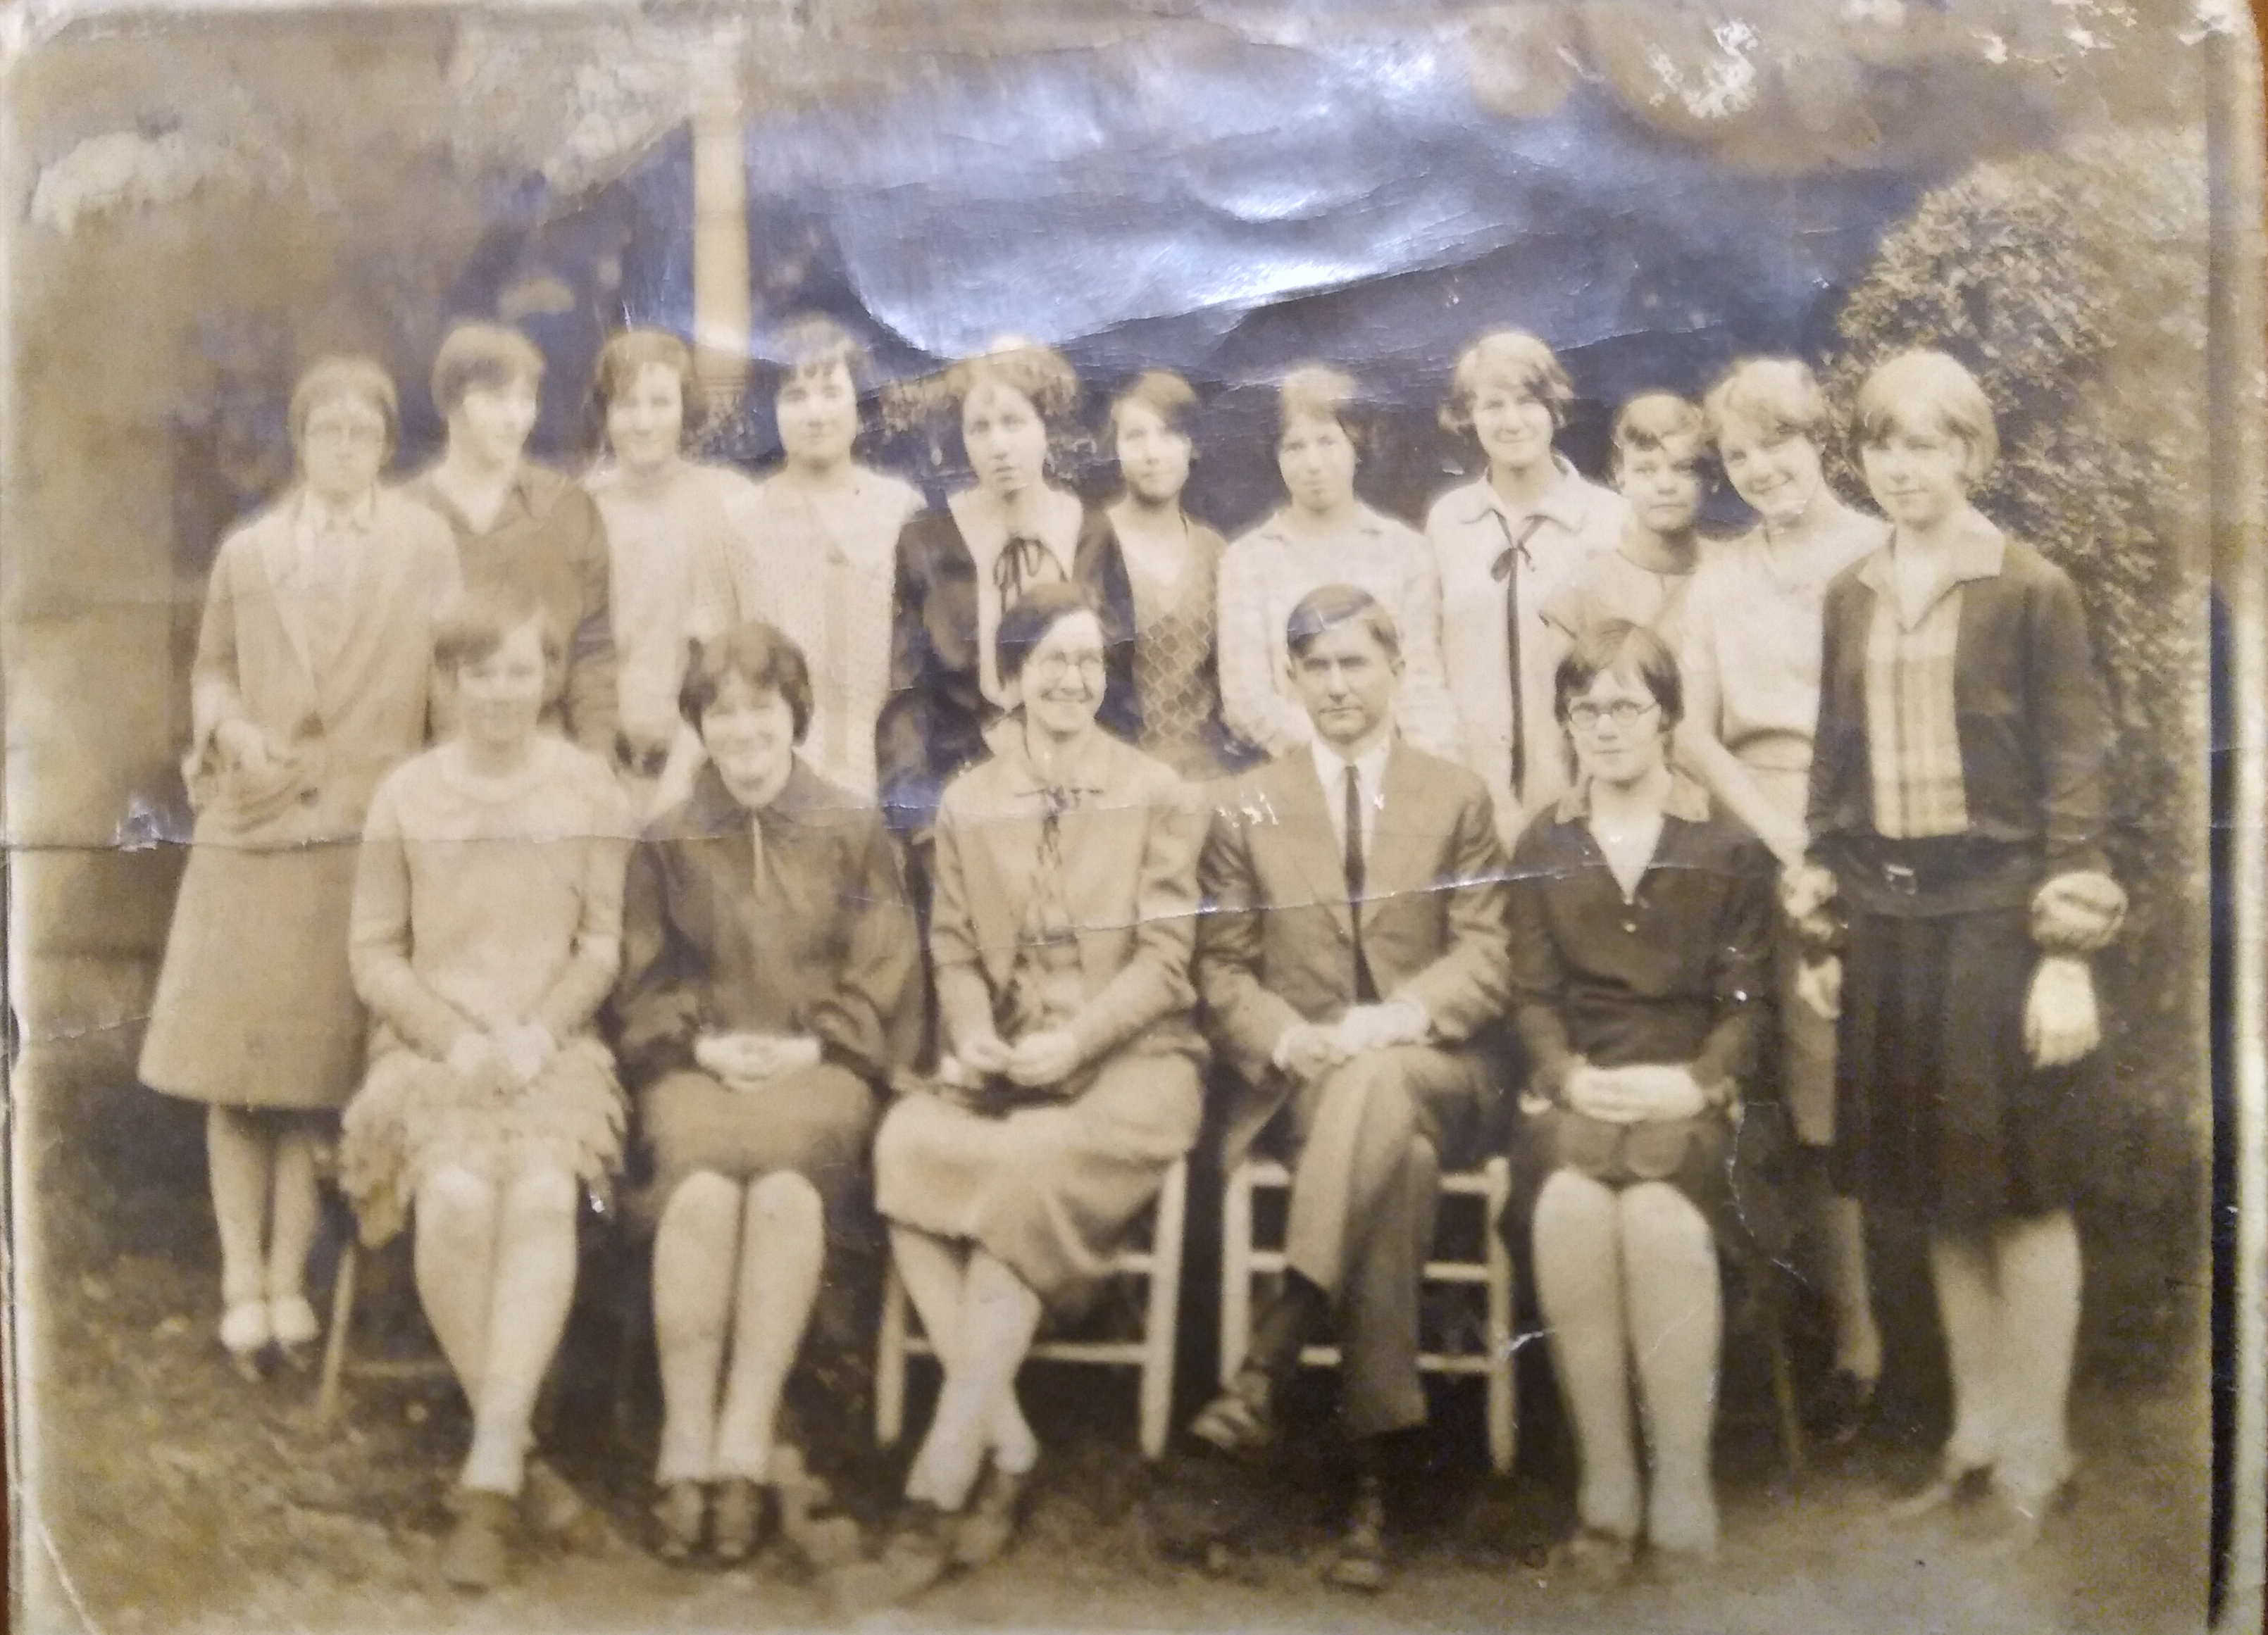 My grandmother's Bible class, 1928.